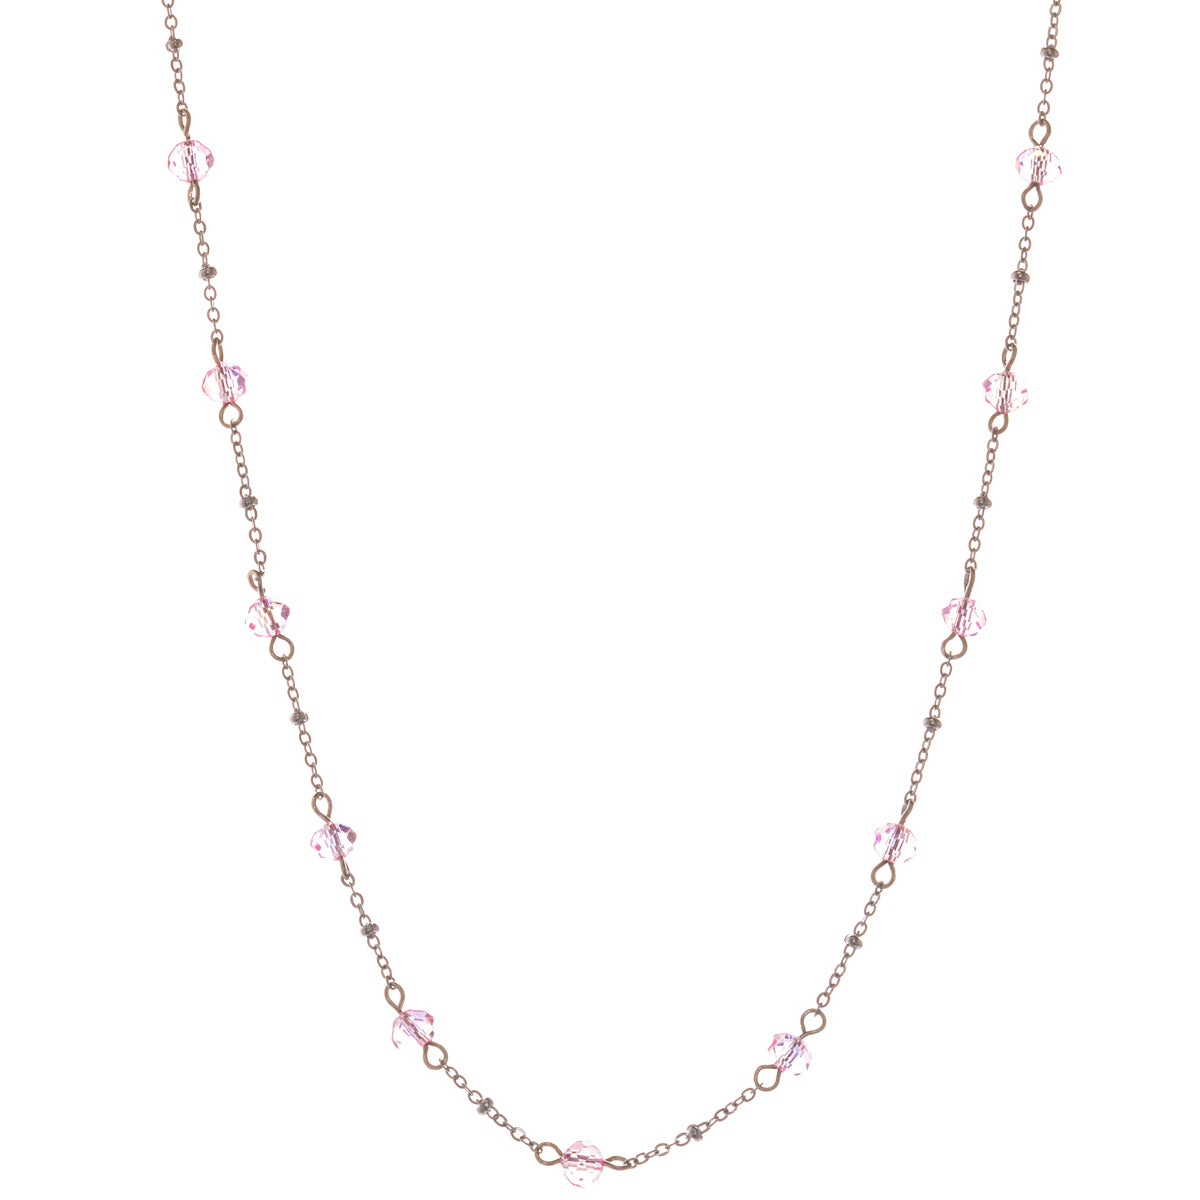 Bead necklace 48cm (steel 316L)